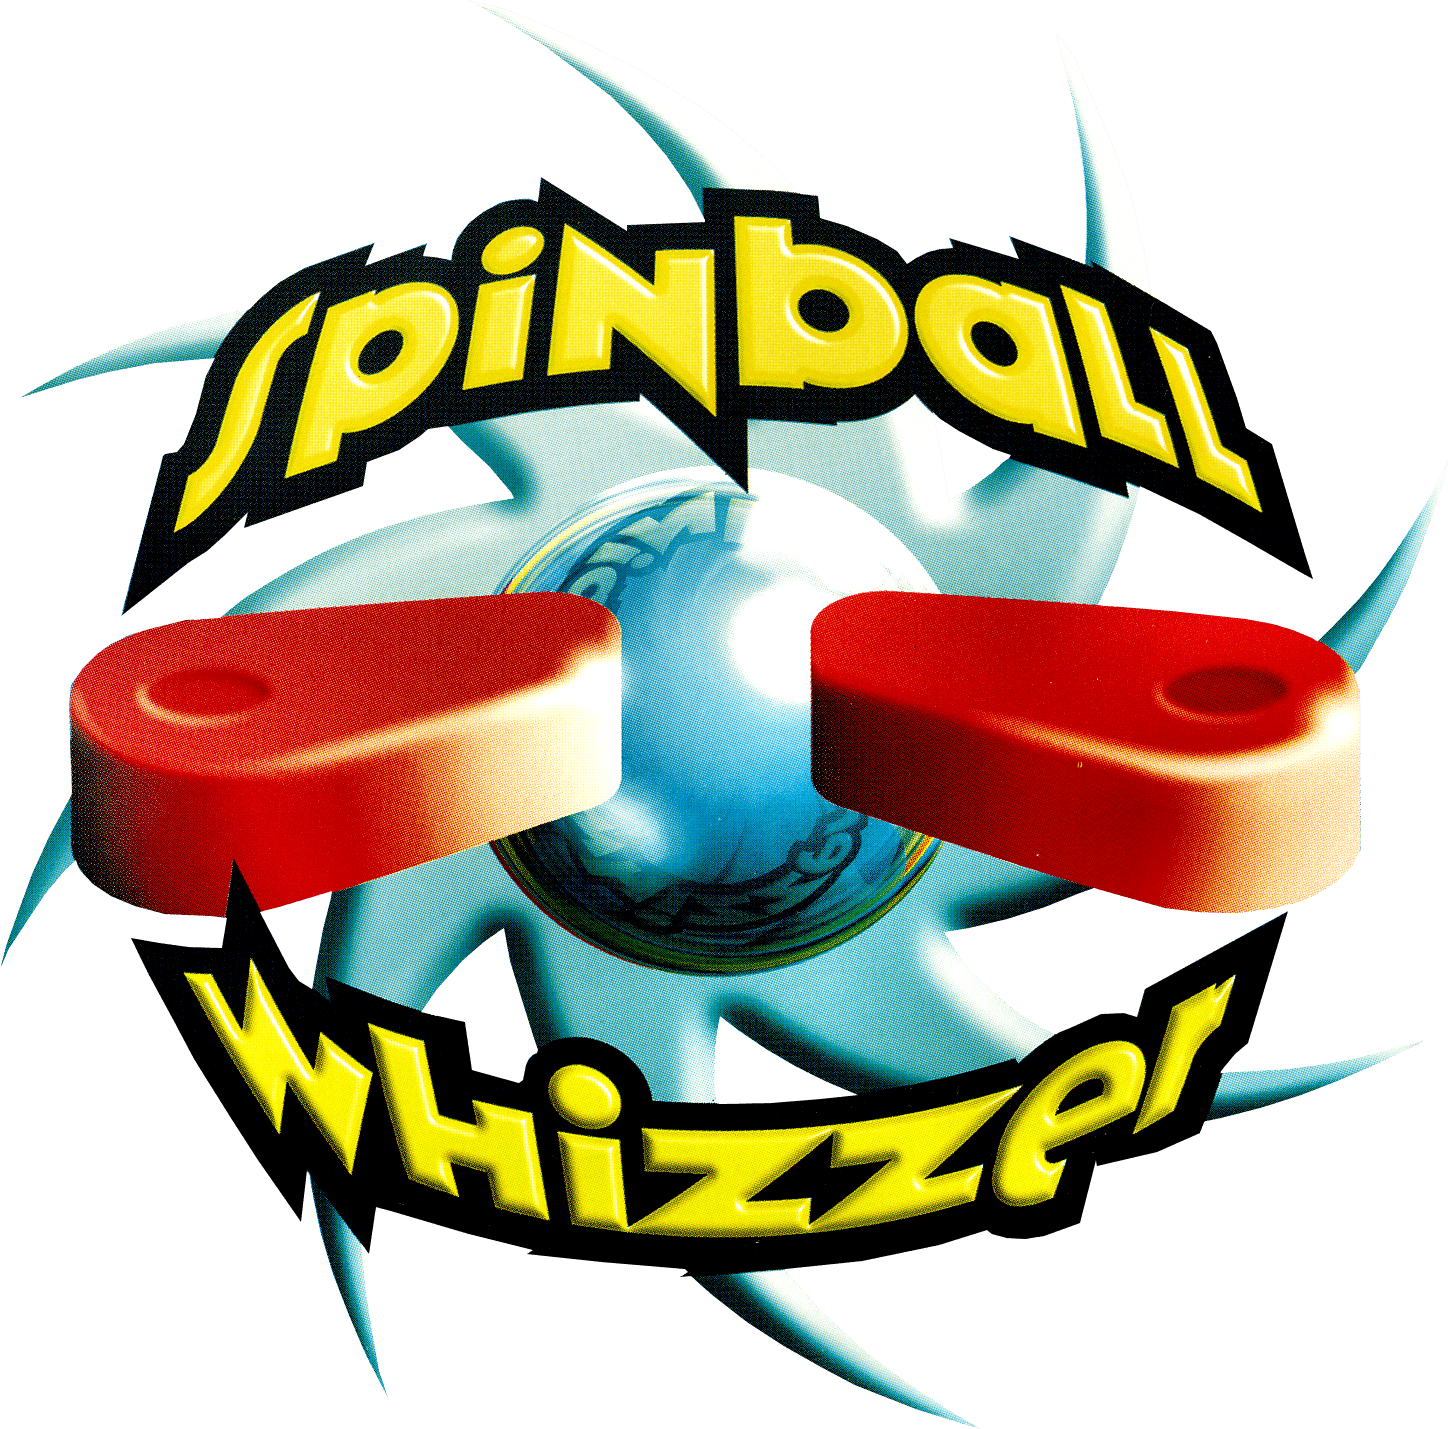 Whizzer Logo - Spinball Whizzer - Construction Archive - Your premier Alton Towers ...